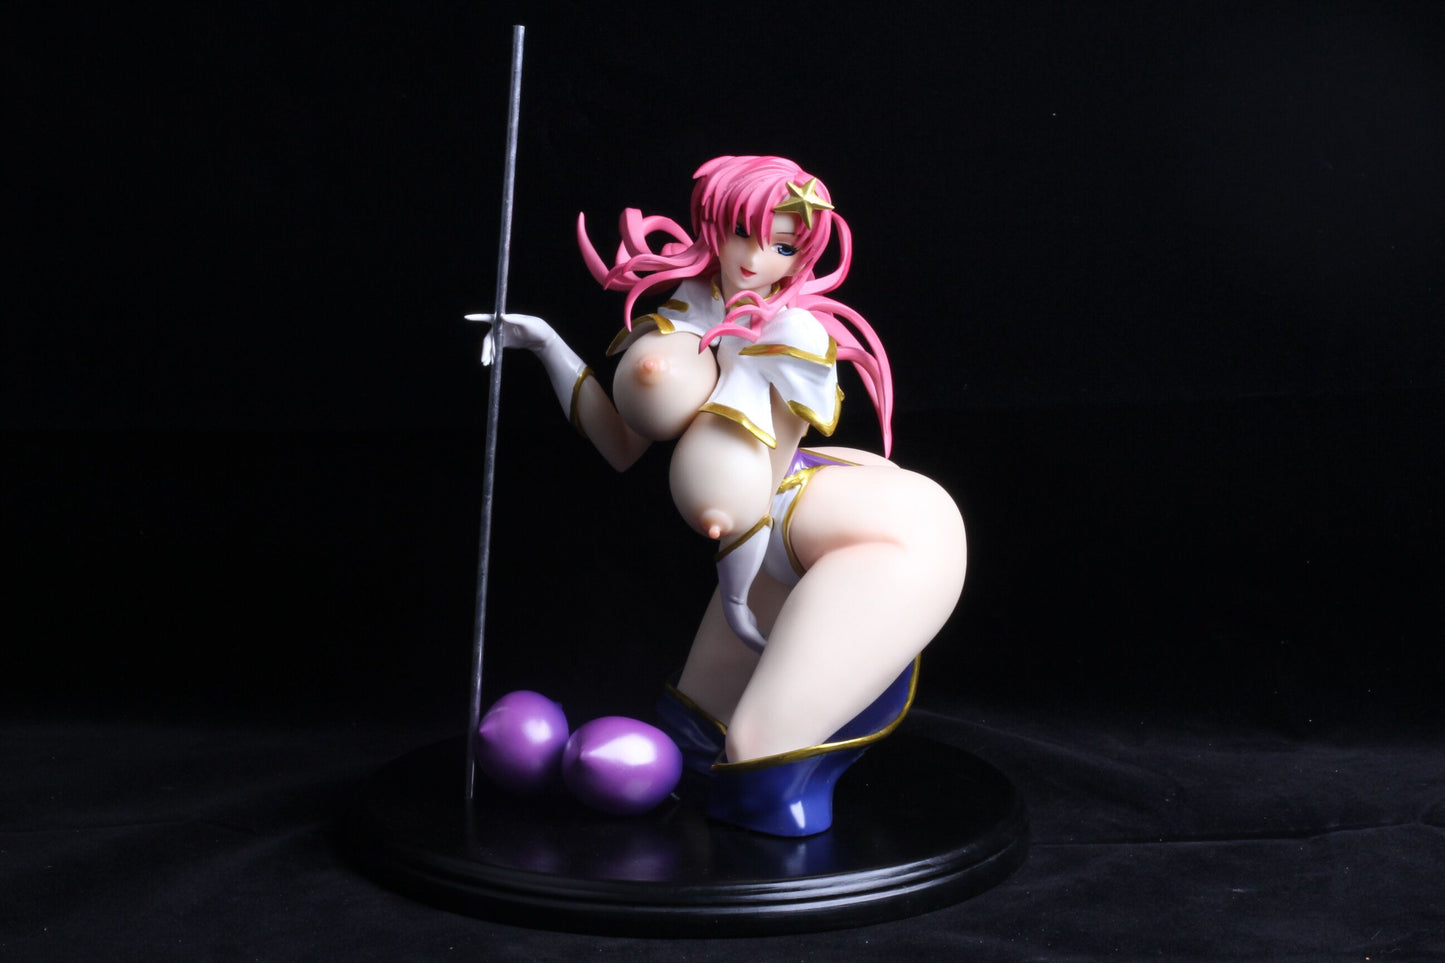 MOBILE SUIT GUNDAM Meer Campbell huge breast 1/6 naked anime figure